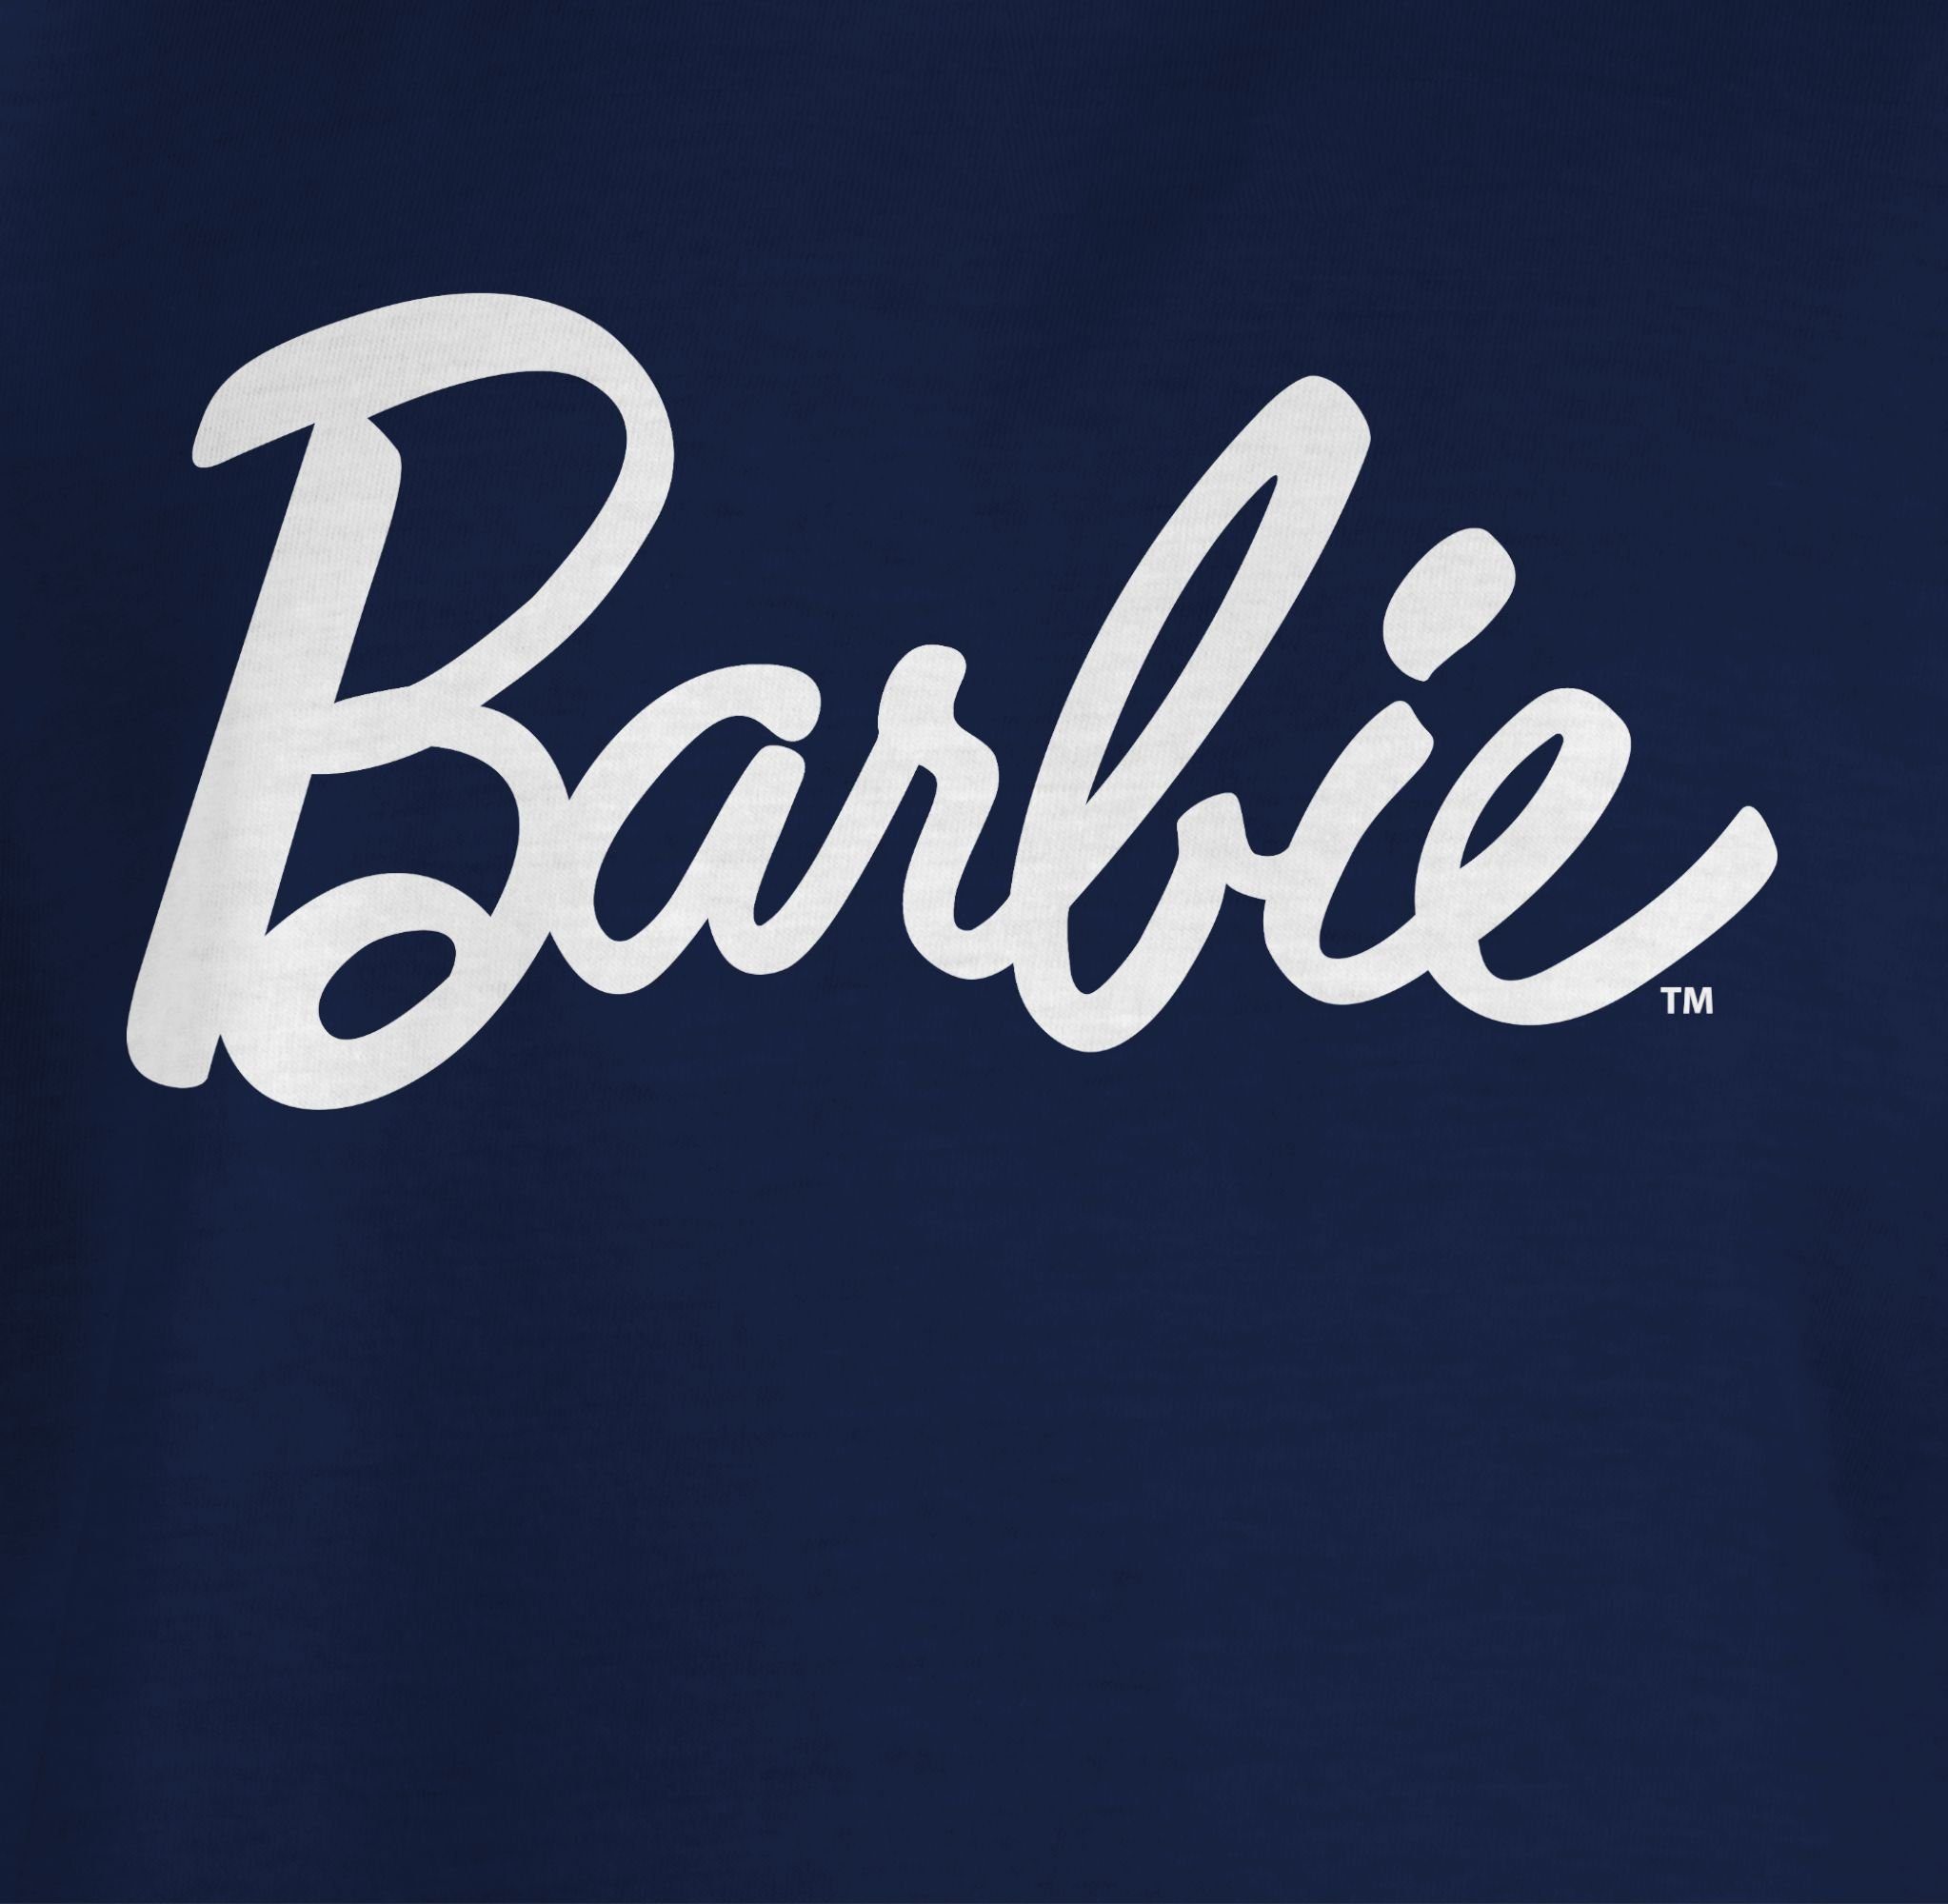 Shirtracer T-Shirt 2 Logo weiß Barbie Barbie Dunkelblau Mädchen